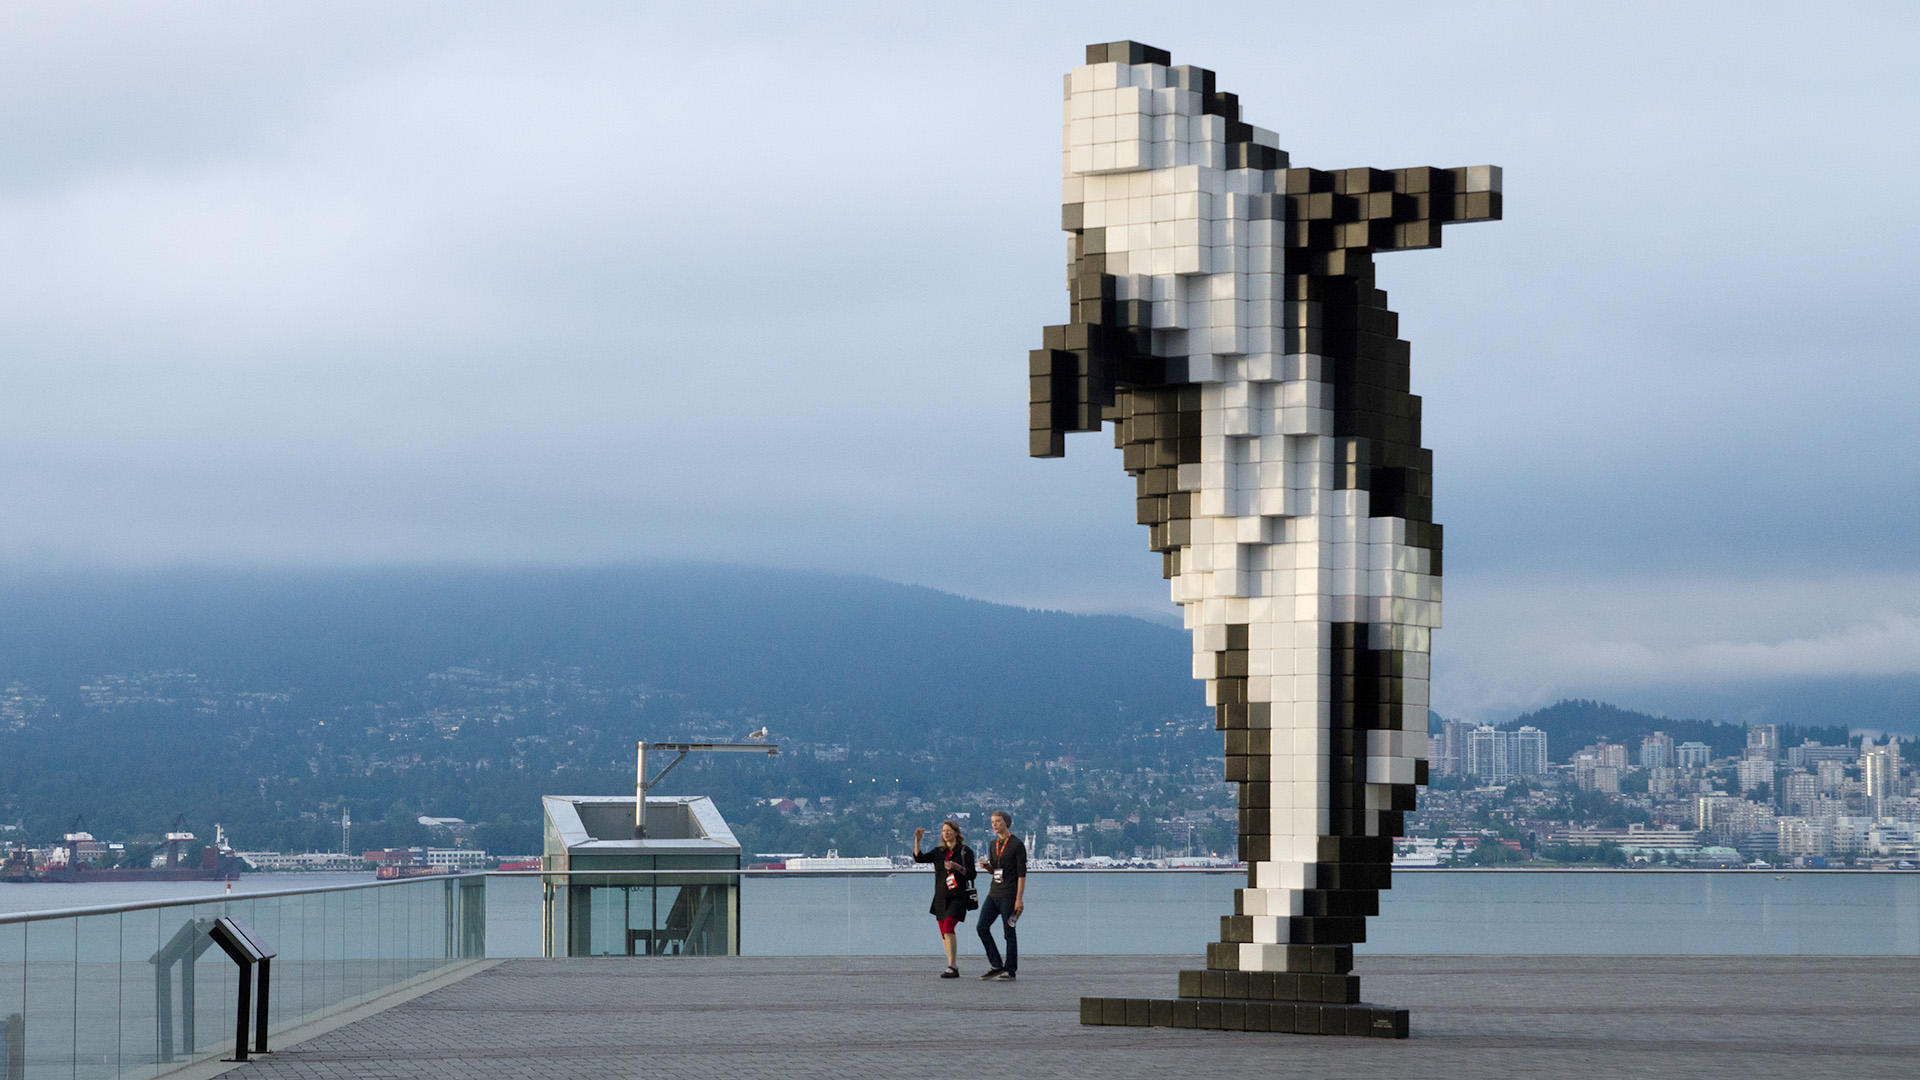 Douglas Coupland's sculpture "Digital Orca" at the Vancouver Convention Center